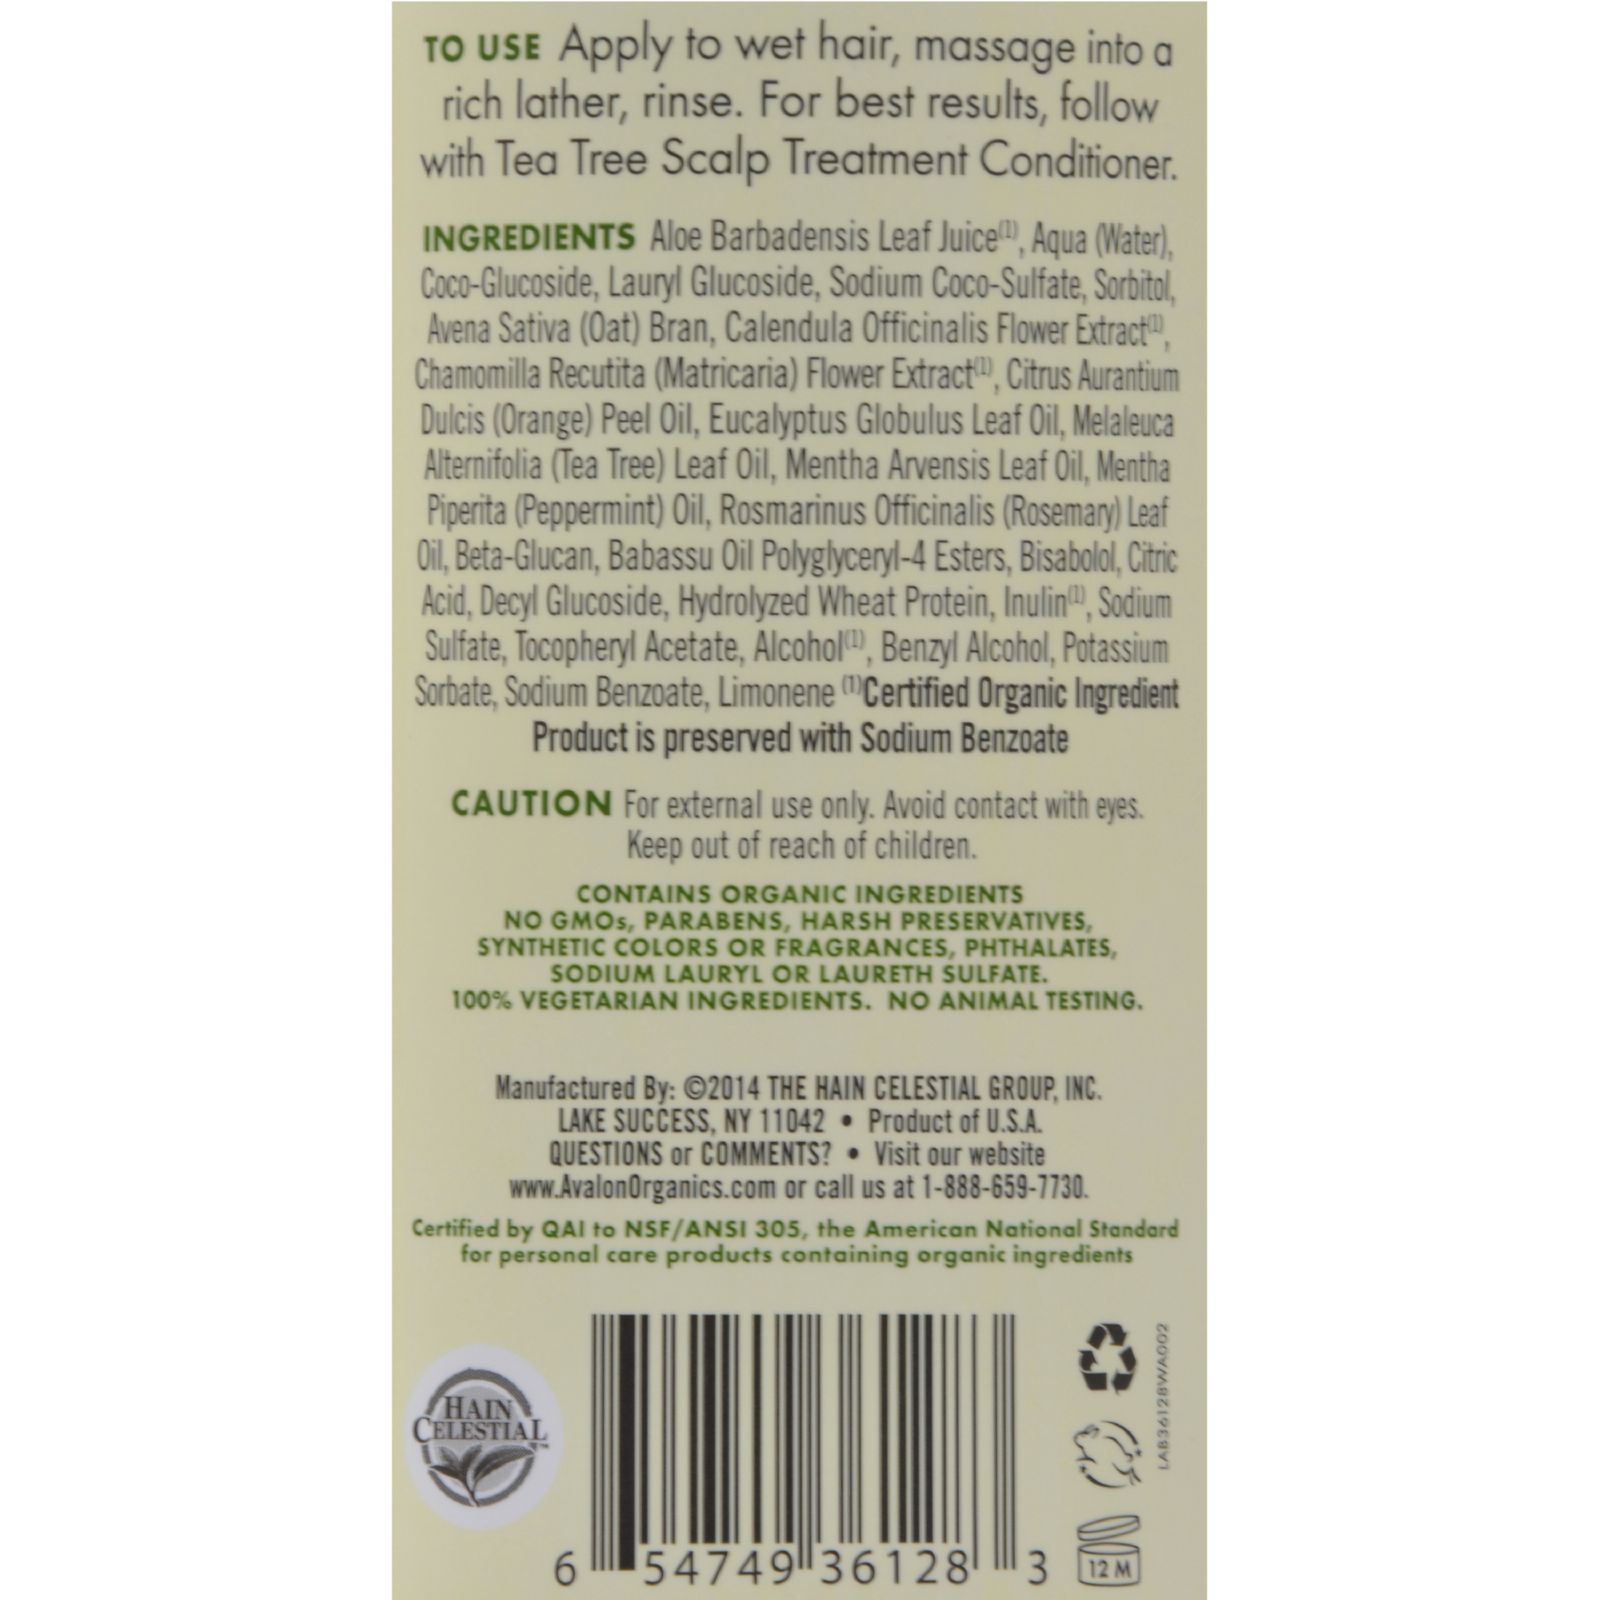 Avalon Shampoo - Organic Tea Tree - 32 oz